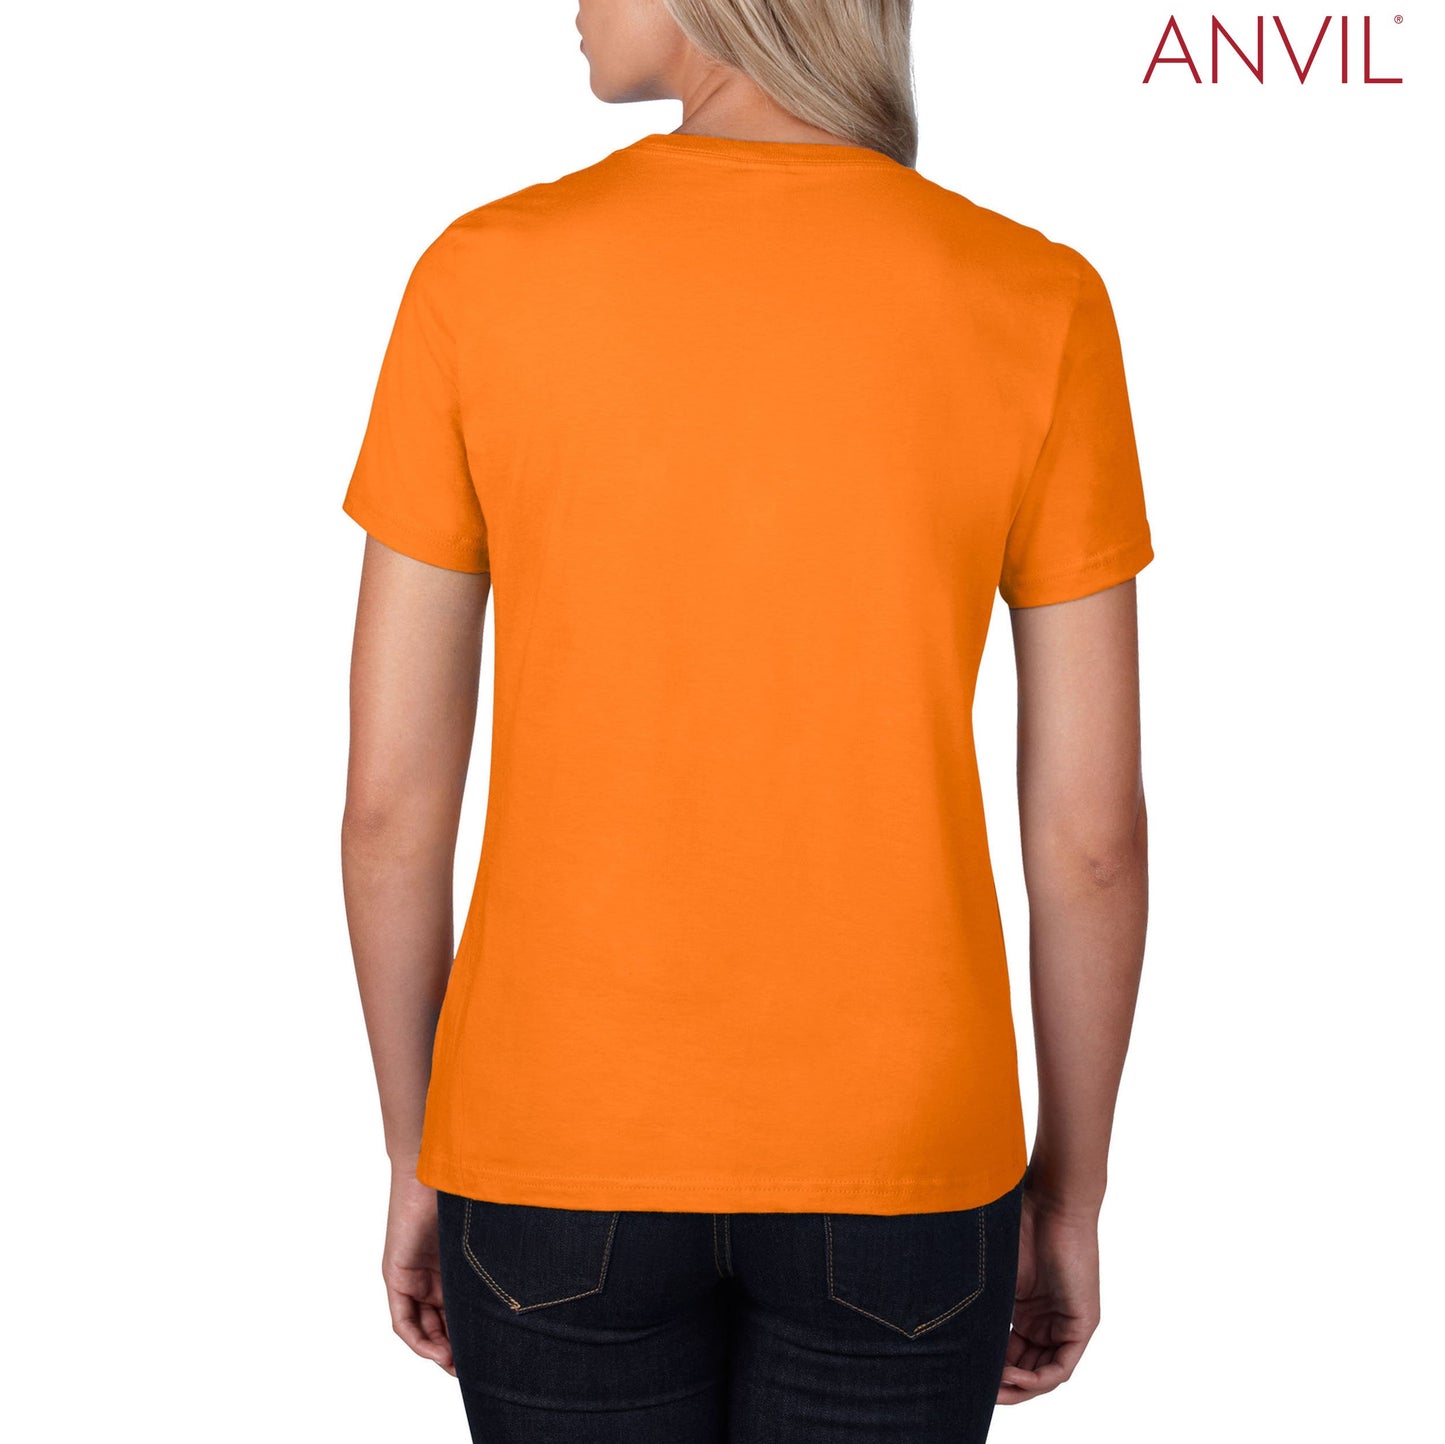 880 Anvil Ladies™ Lightweight T-Shirt